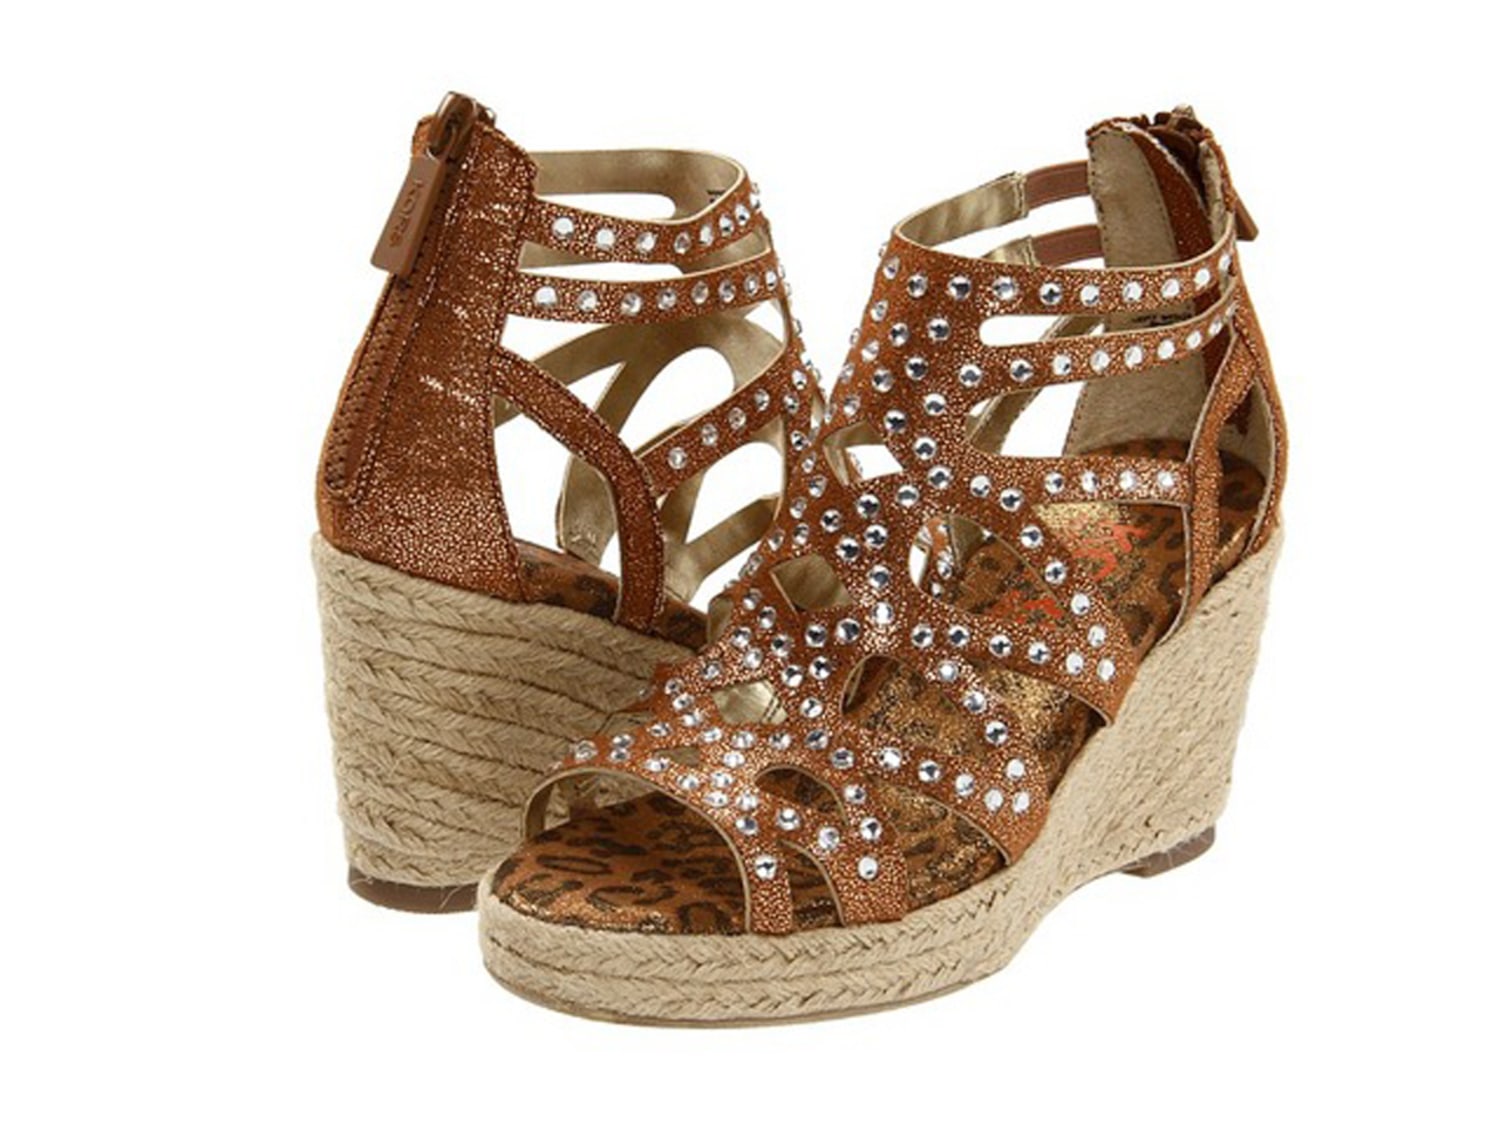 Power girl platform heels with spikes - Shoebidoo Shoes | Giaro high heels